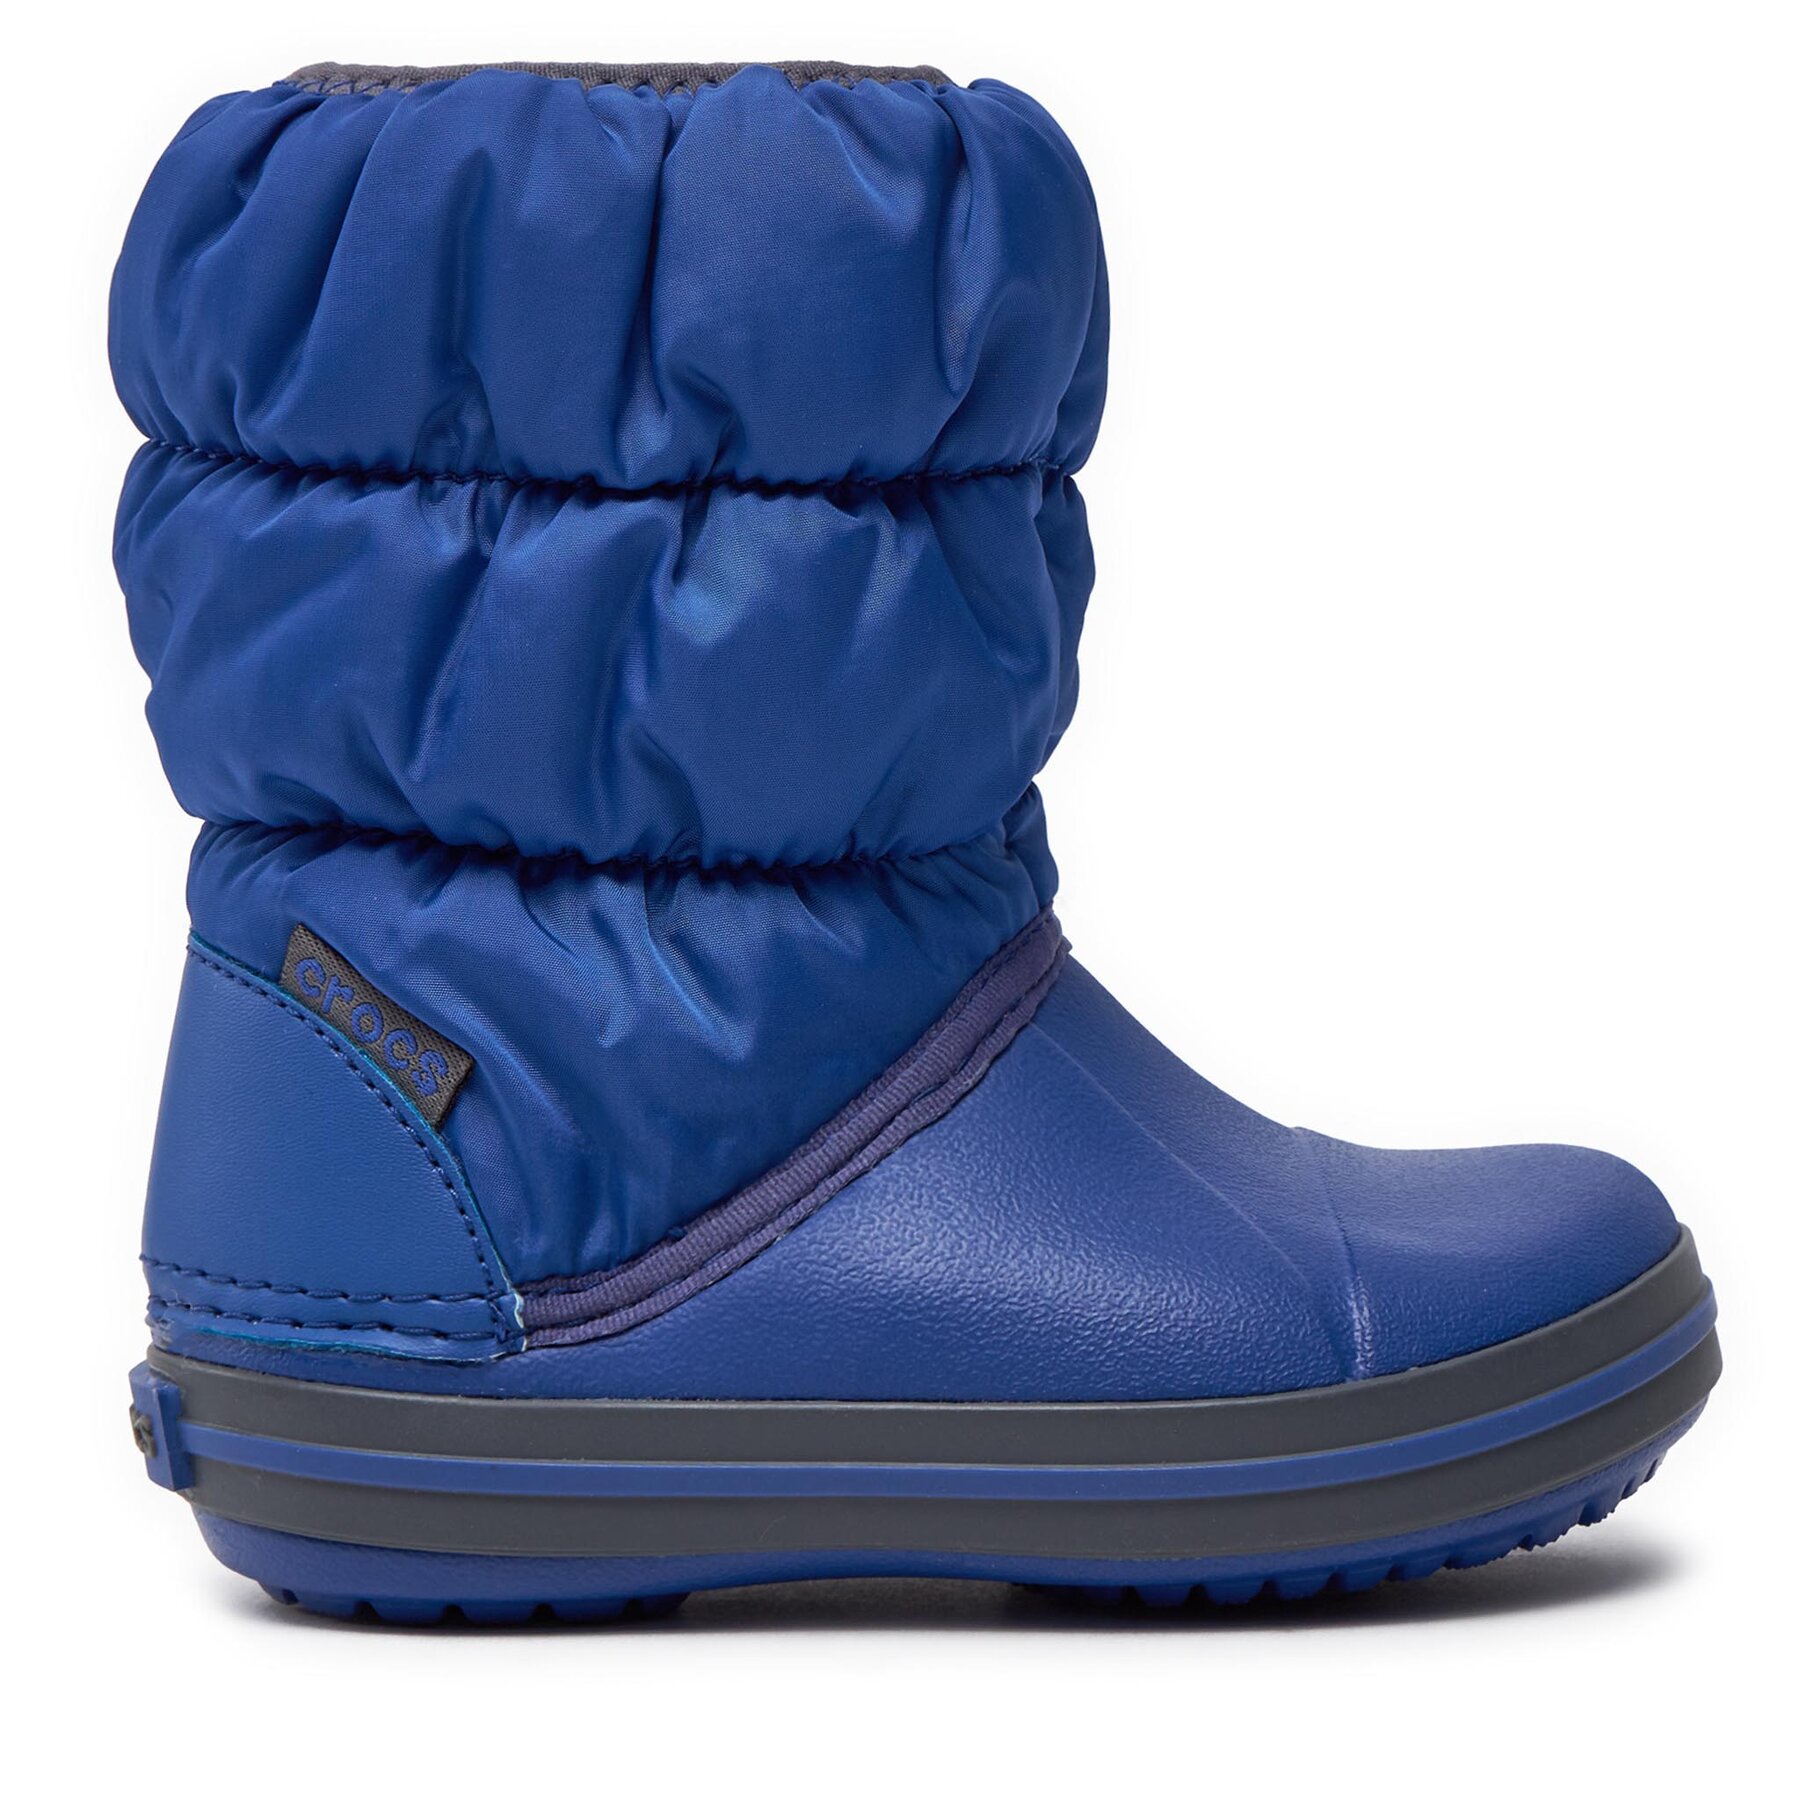 Comprar en oferta Crocs Winter Puff Kids cerulean blue/light grey royal